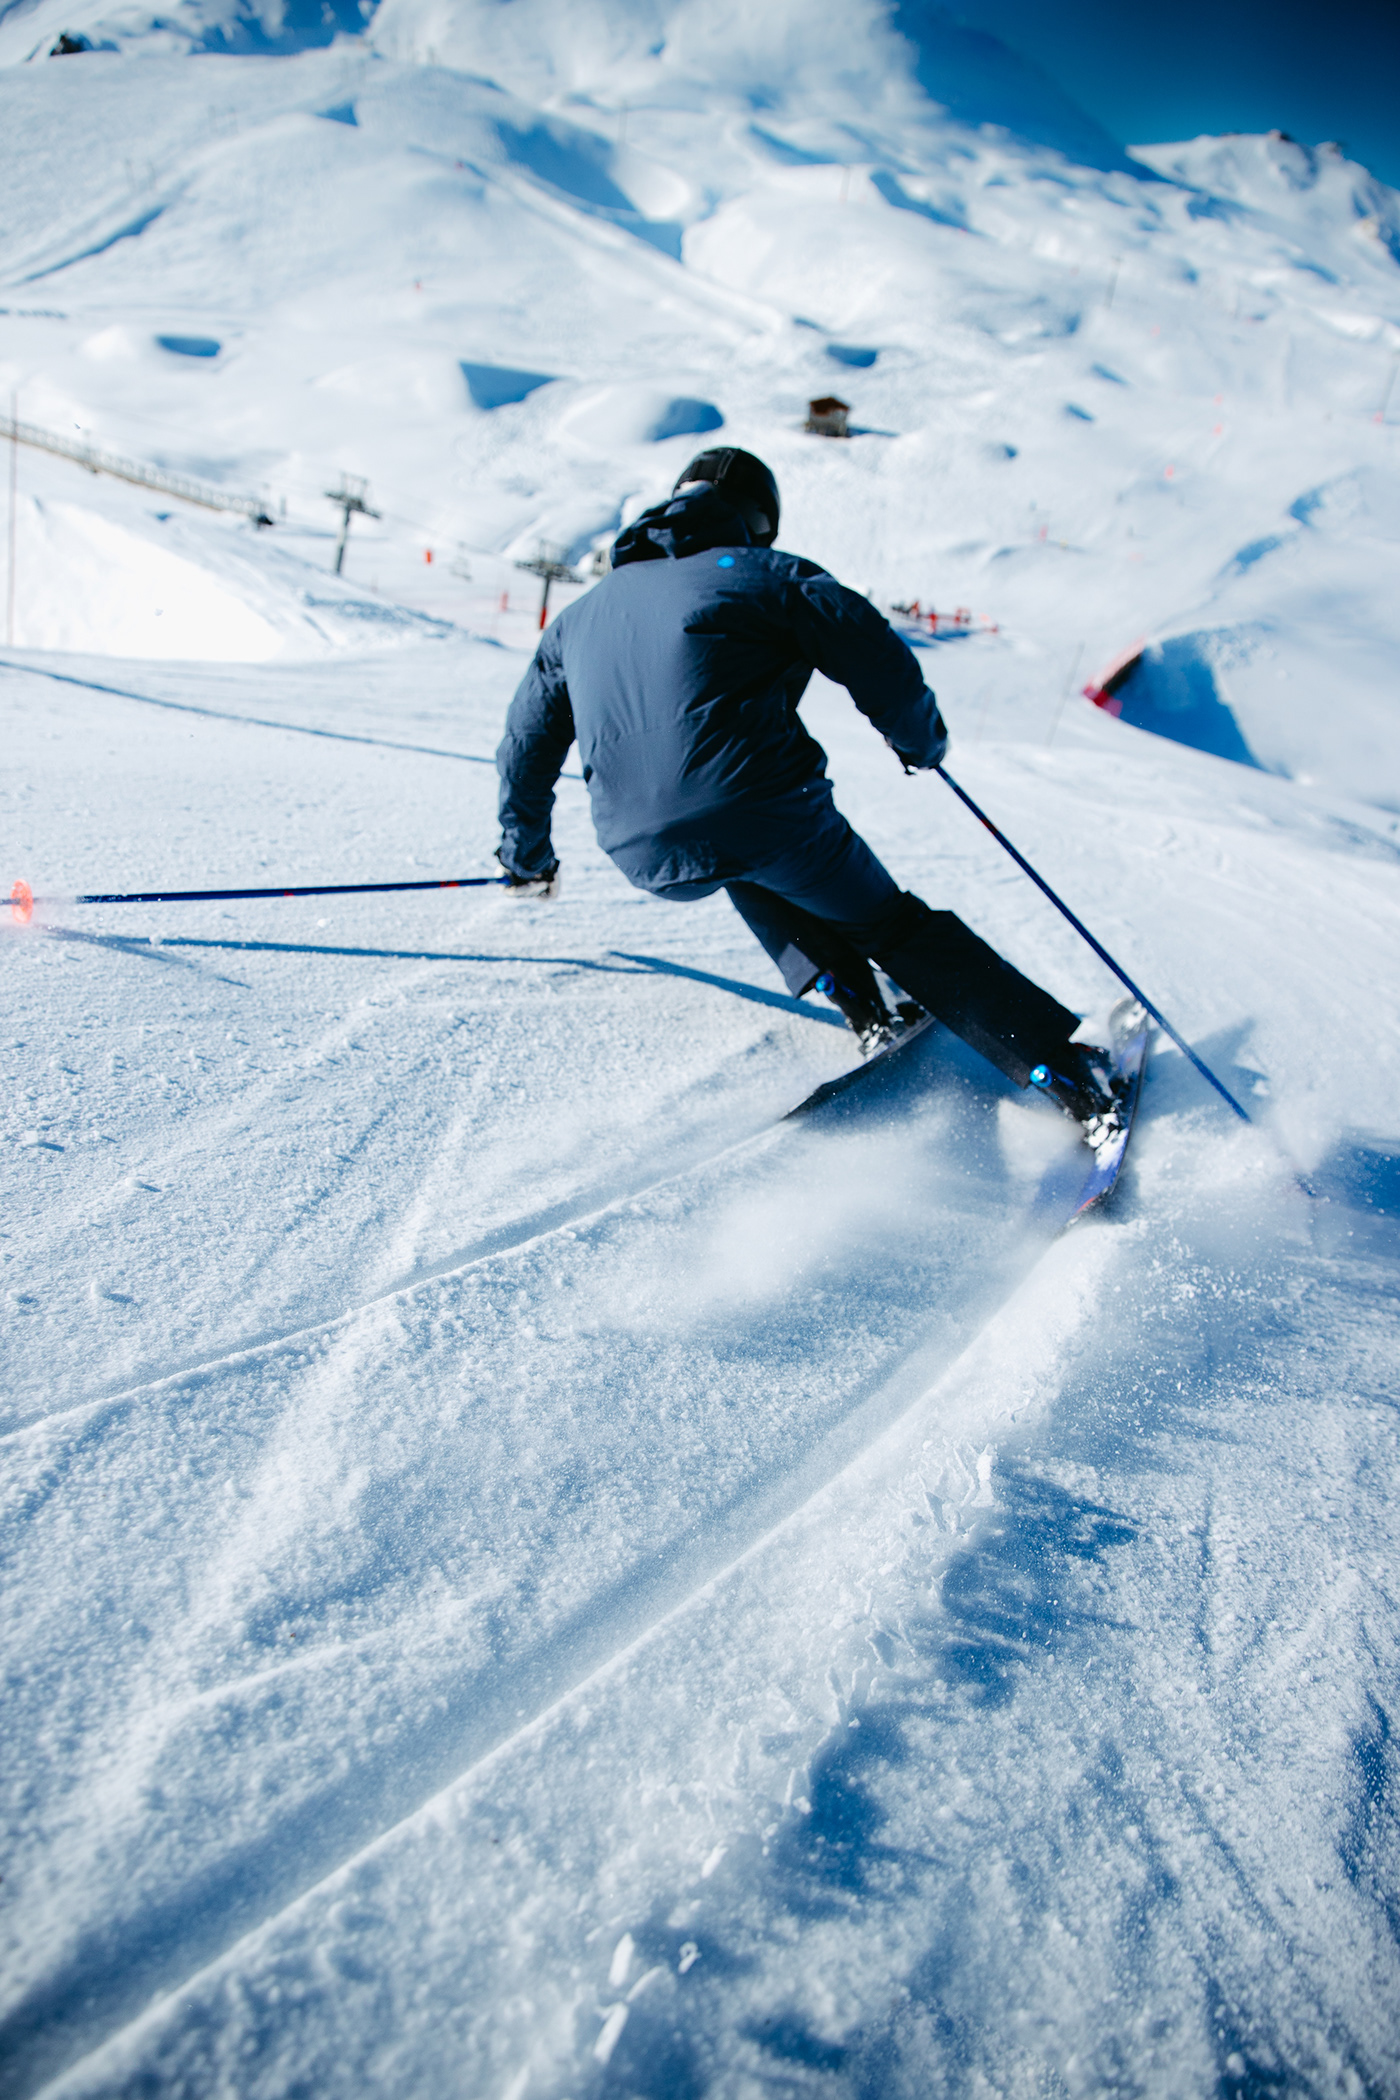 mode photography photographer Photography  Ski skiiing skiing art snow Snowboarding sports photography